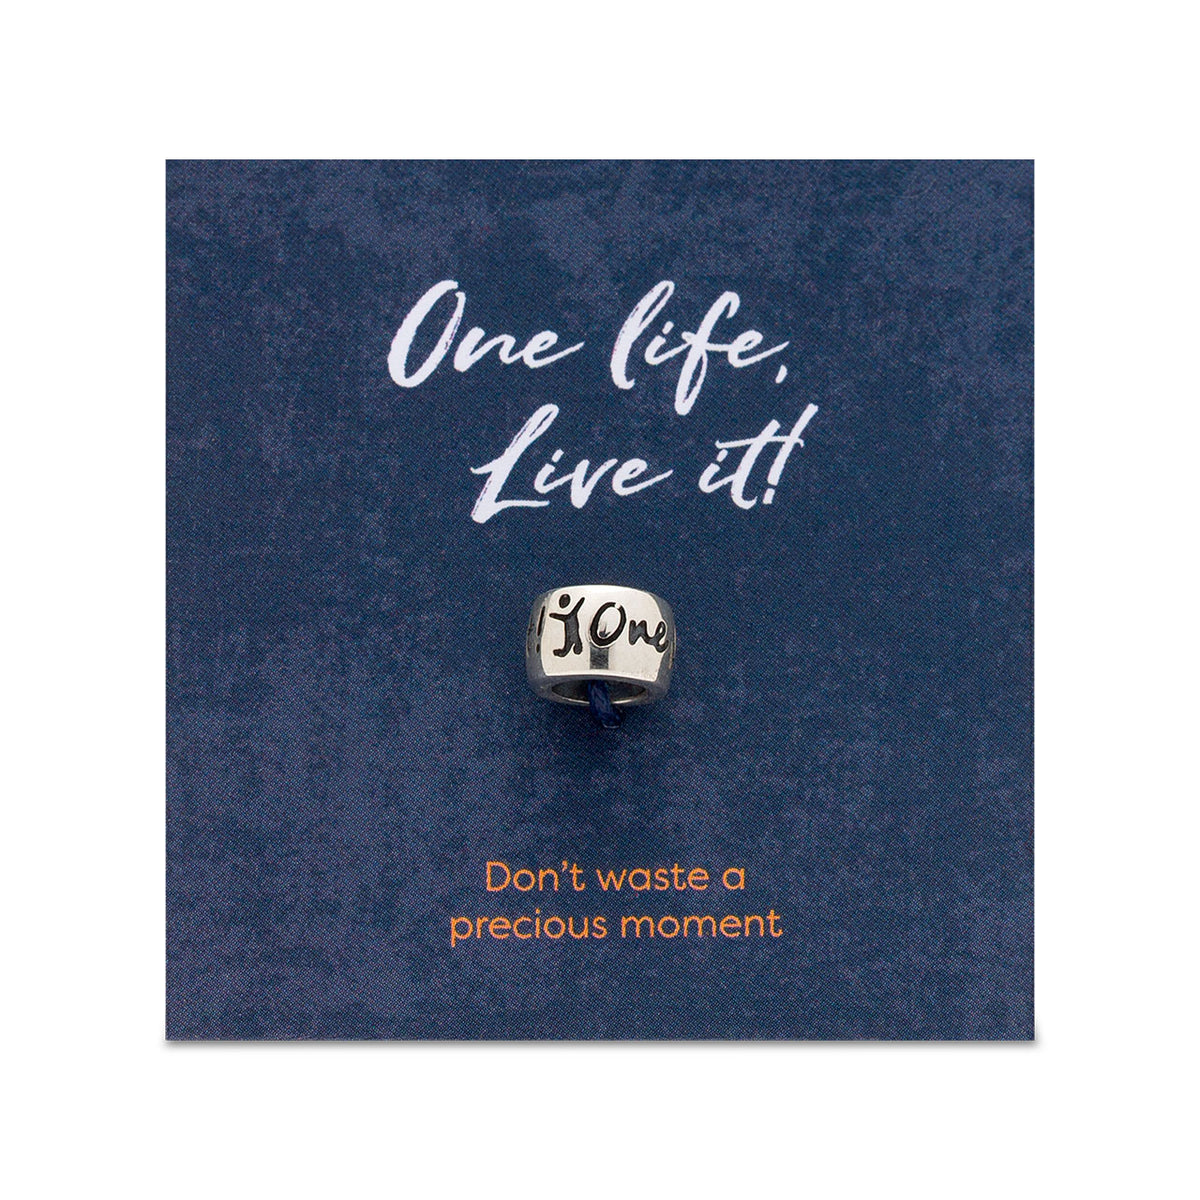 One Life Live It Silver Bead Charm fits Pandora style bracelet